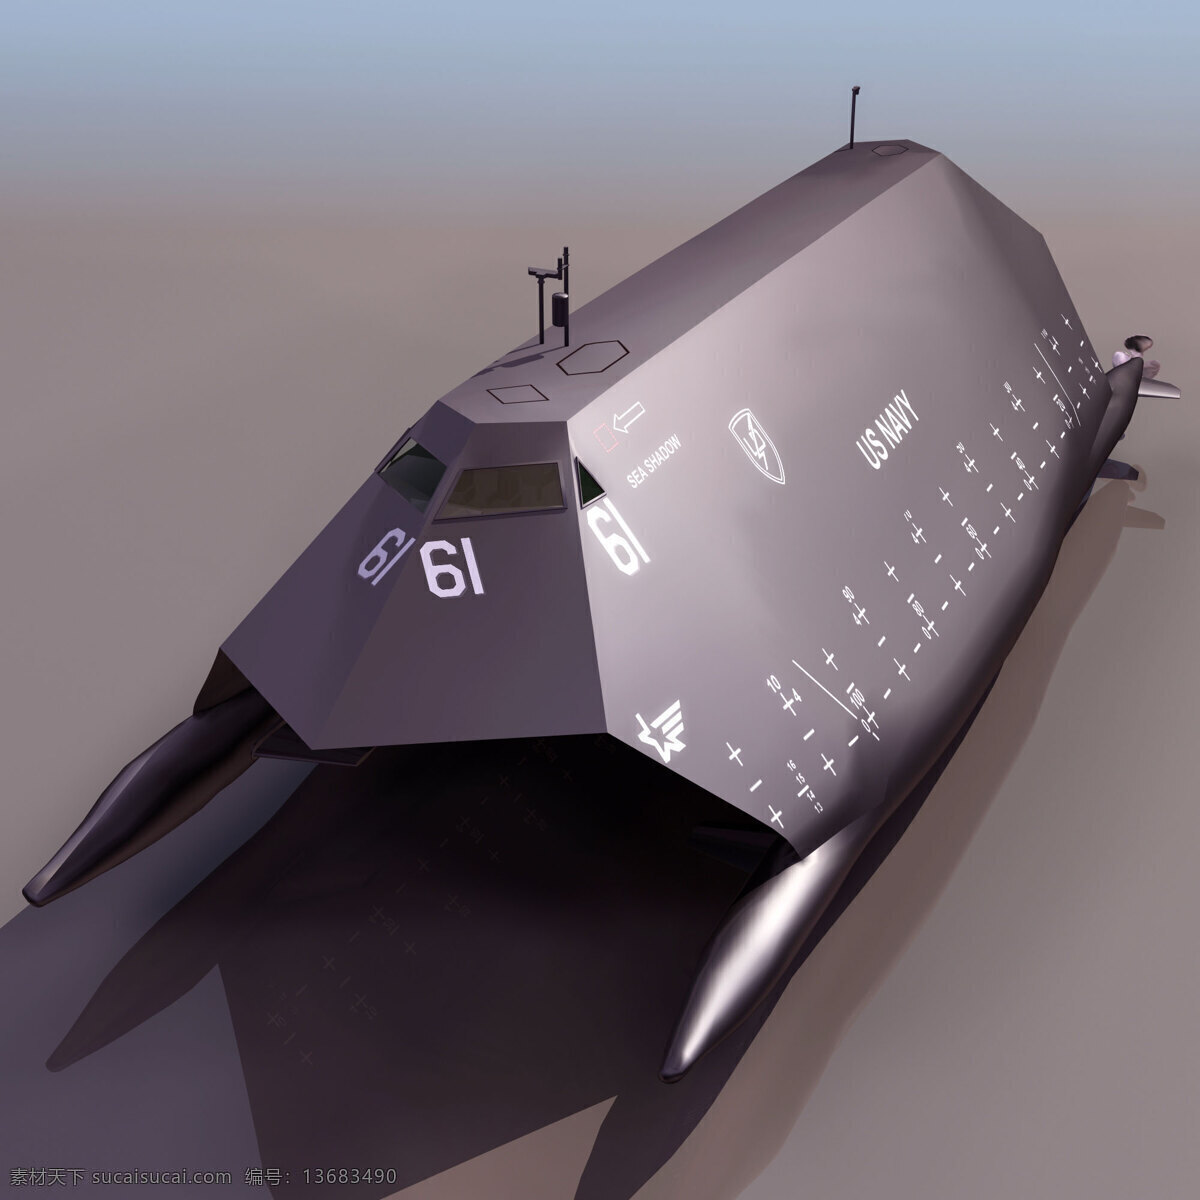 3d模型图库 军事 武器装备 新型战舰 3d作品 3d设计